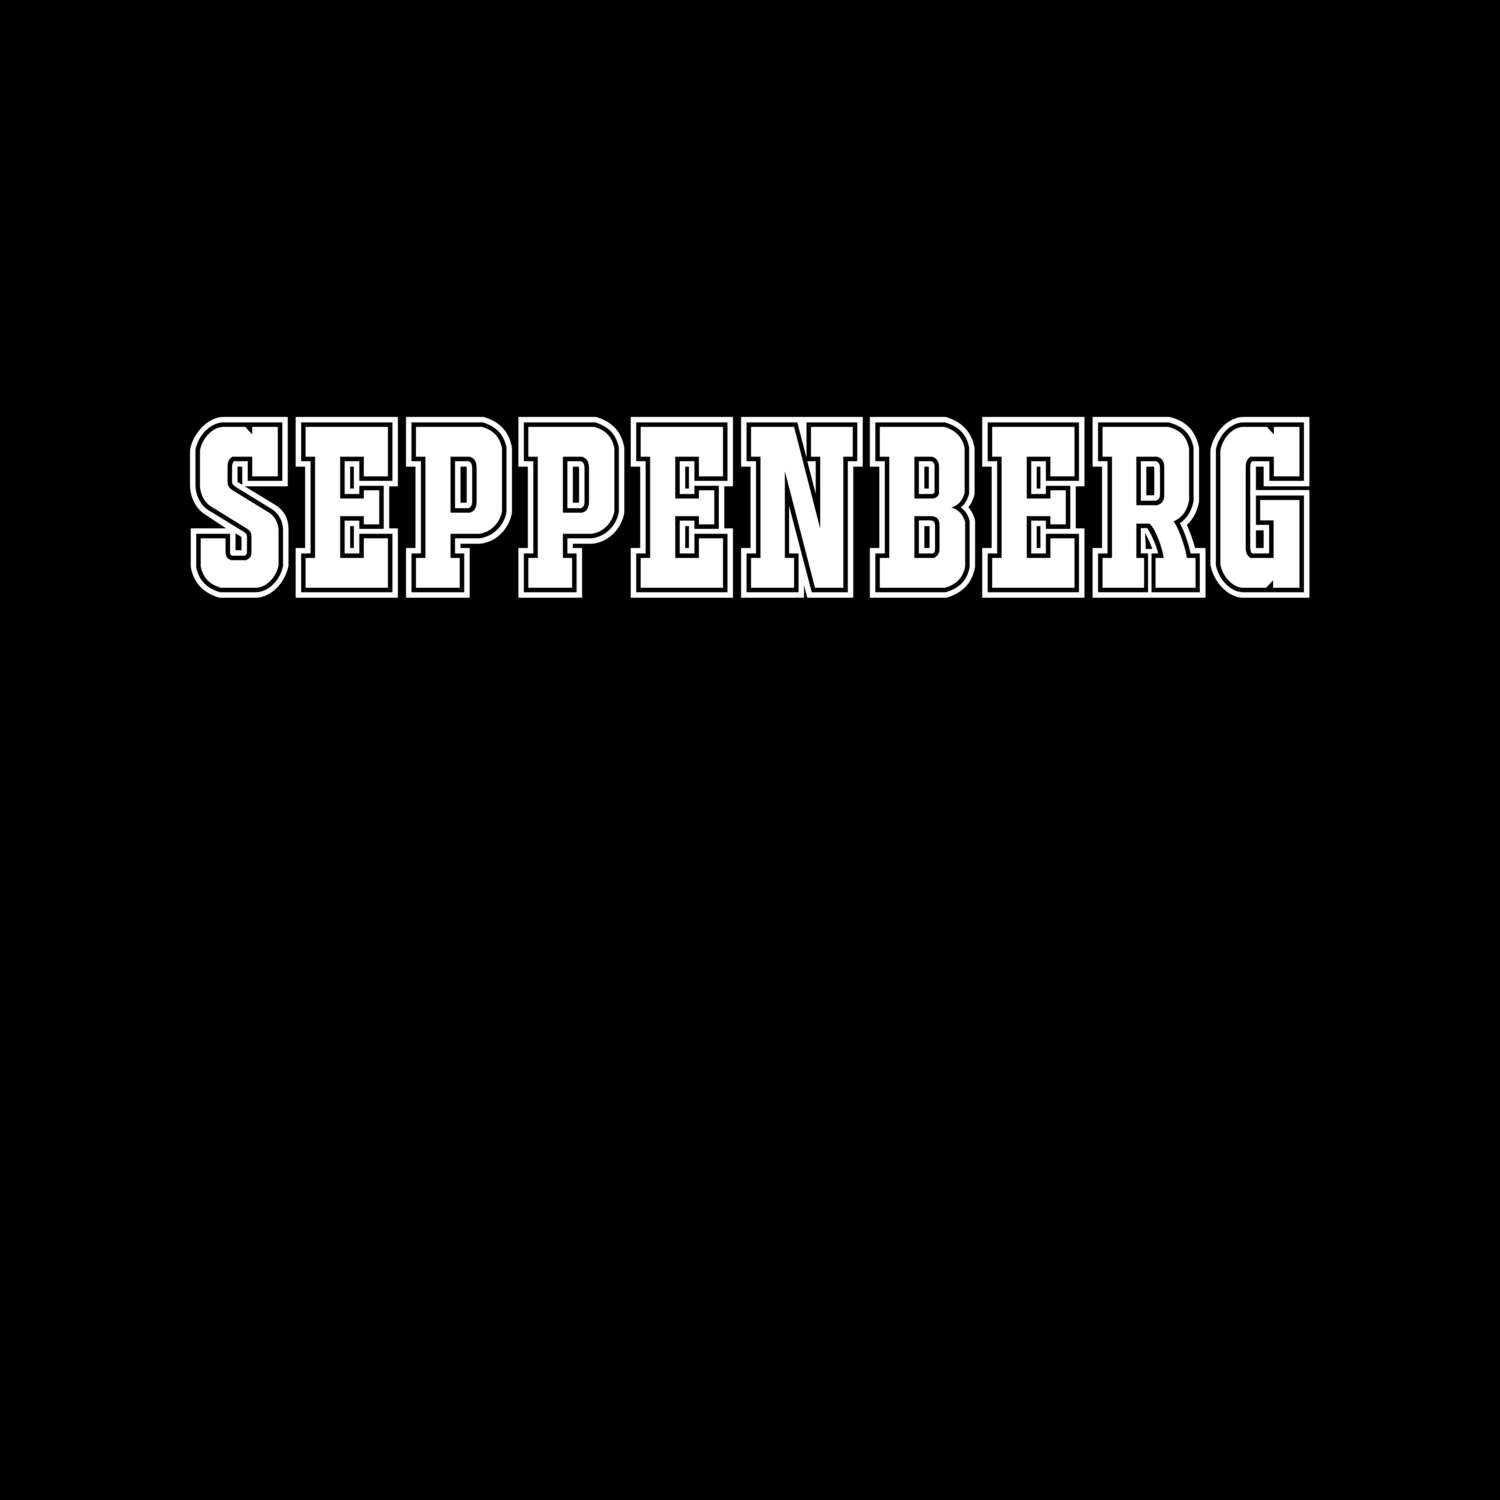 Seppenberg T-Shirt »Classic«